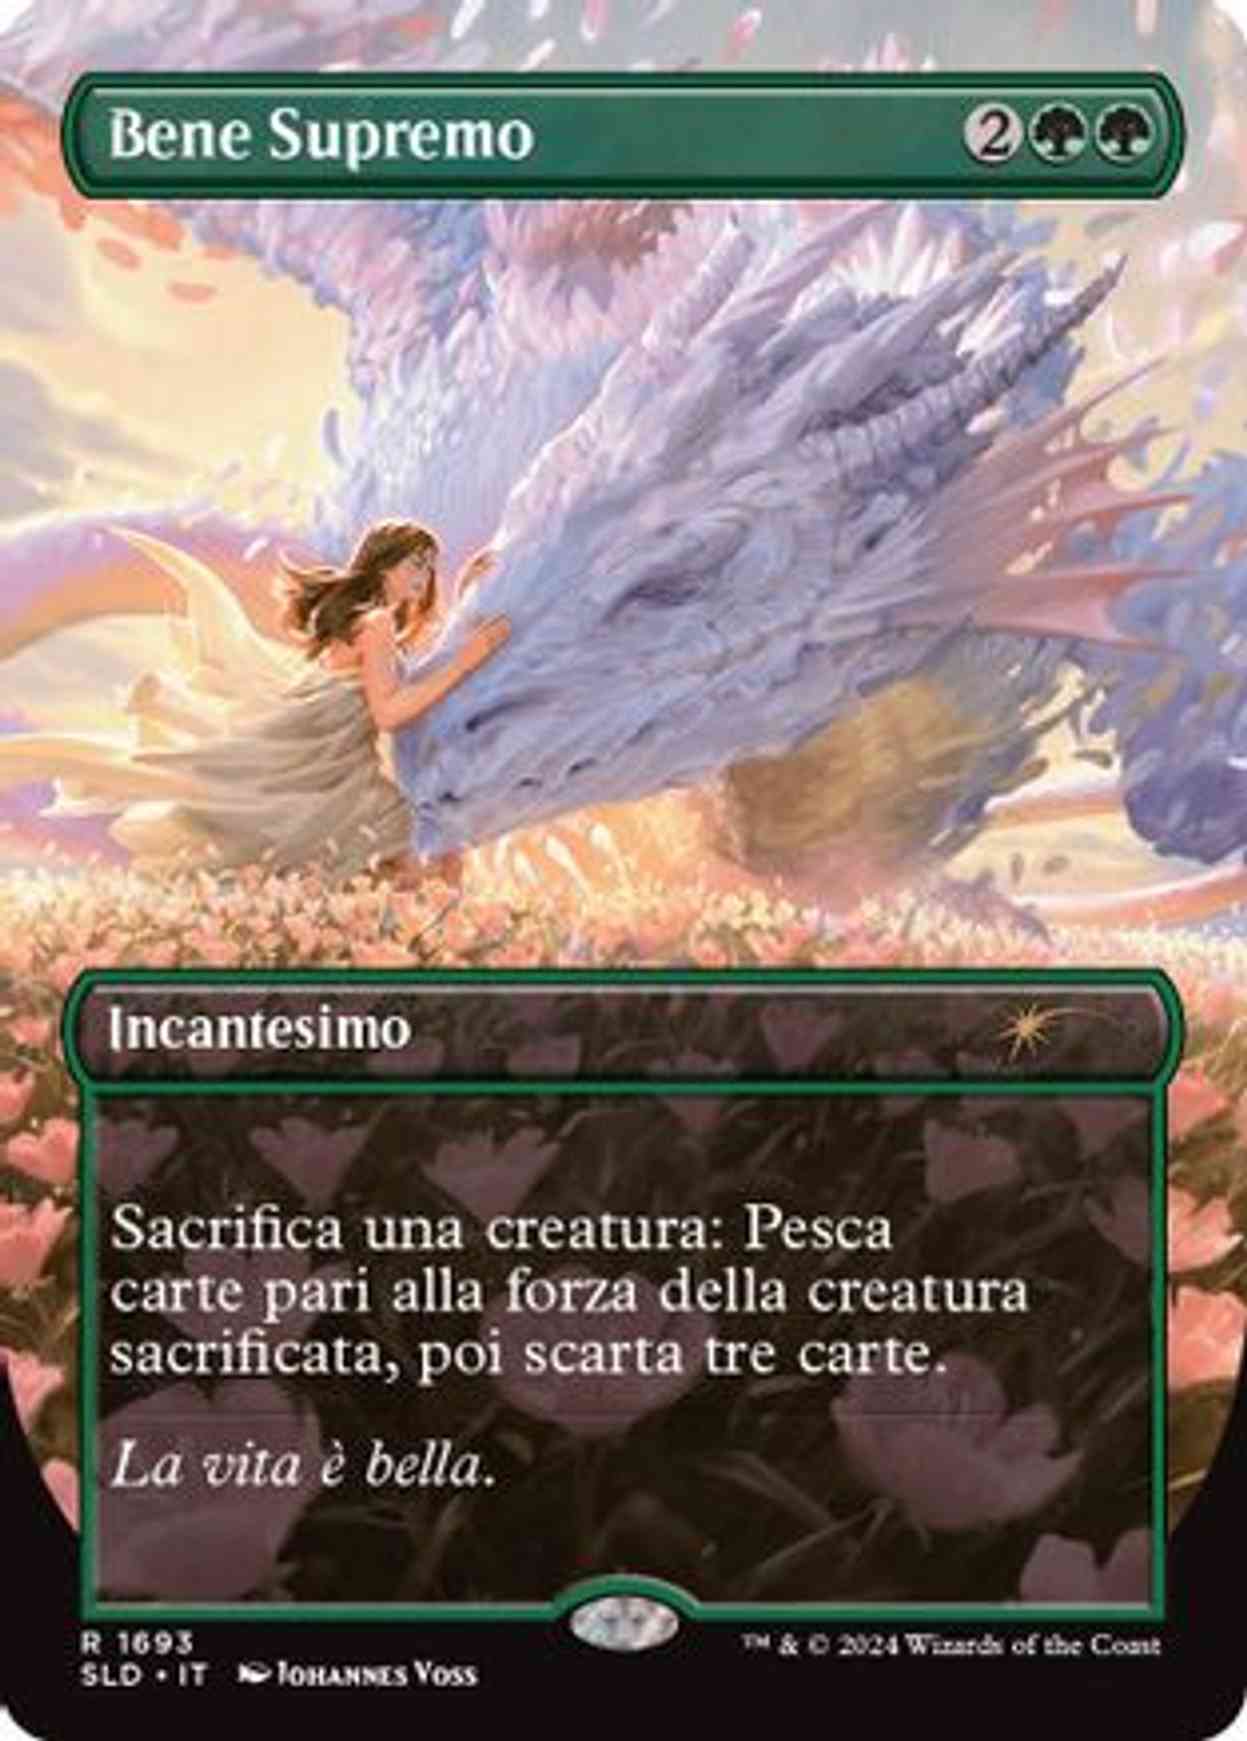 Greater Good (Italian) - "Bene Supremo" magic card front